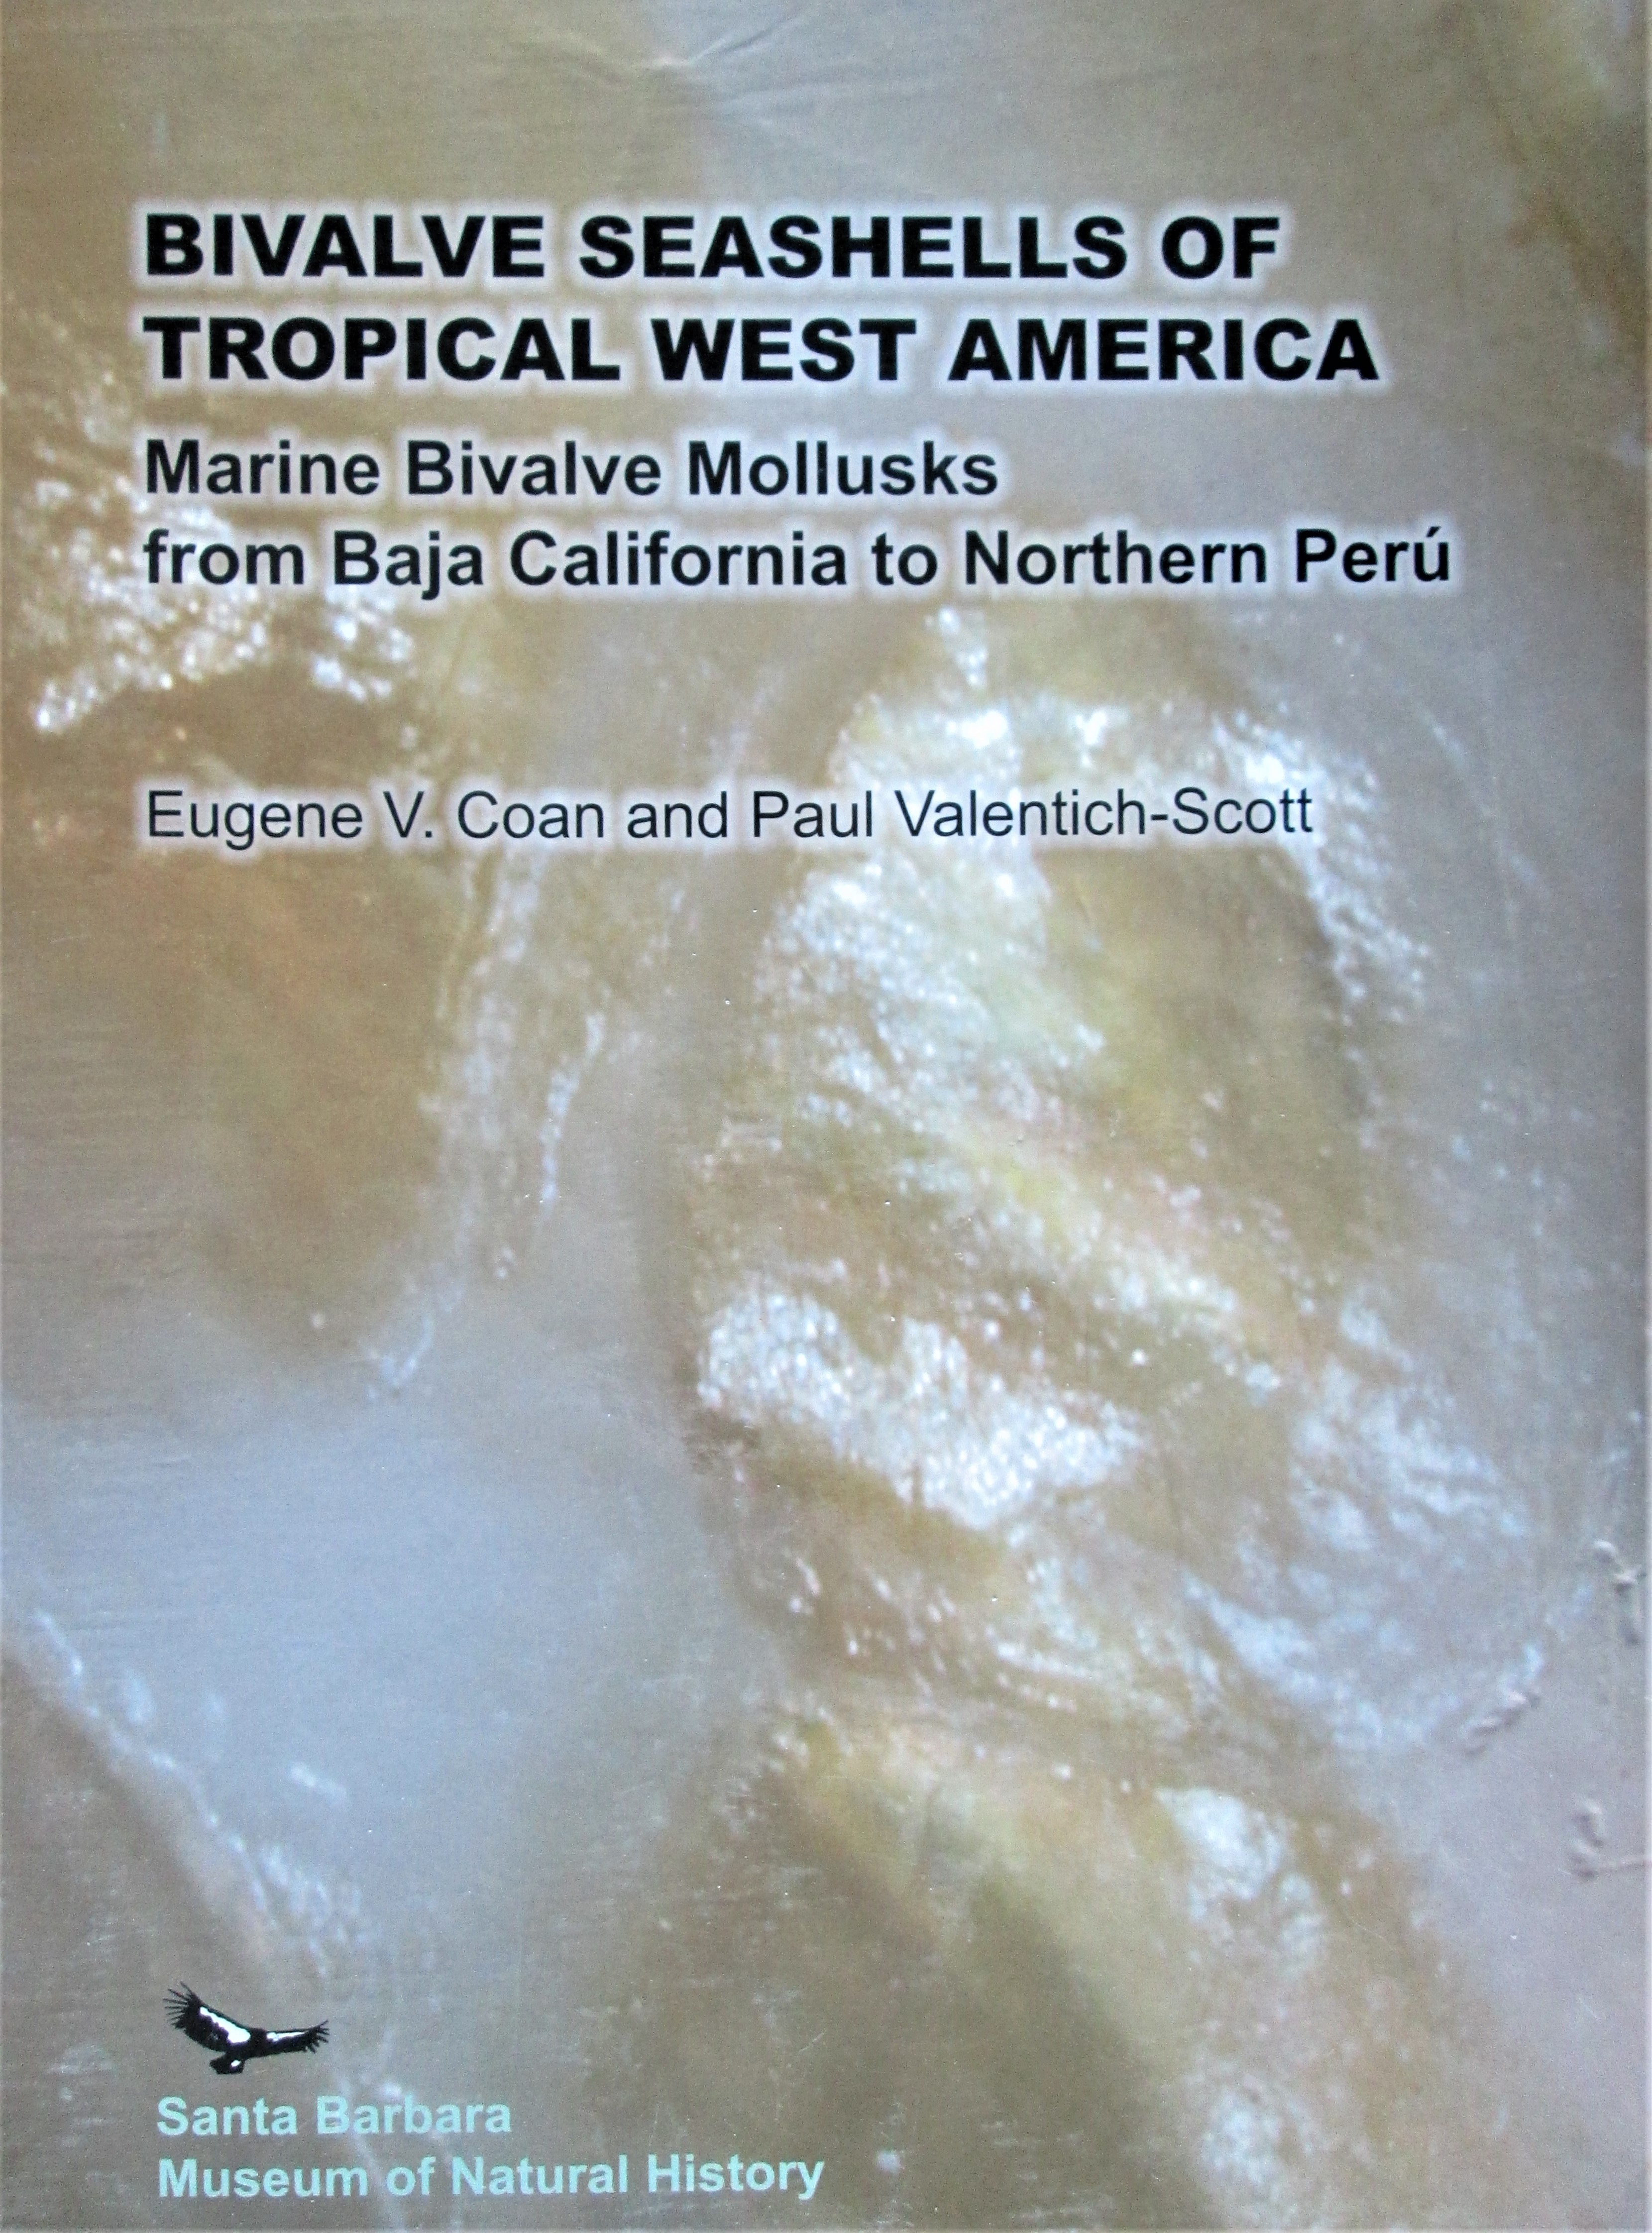 Bivalve Seashells of Tropical West America: Marine Bivalve Mollusks from Baja California to Northern Peru - Coan, Eugene V. and Paul Valentich-Scott